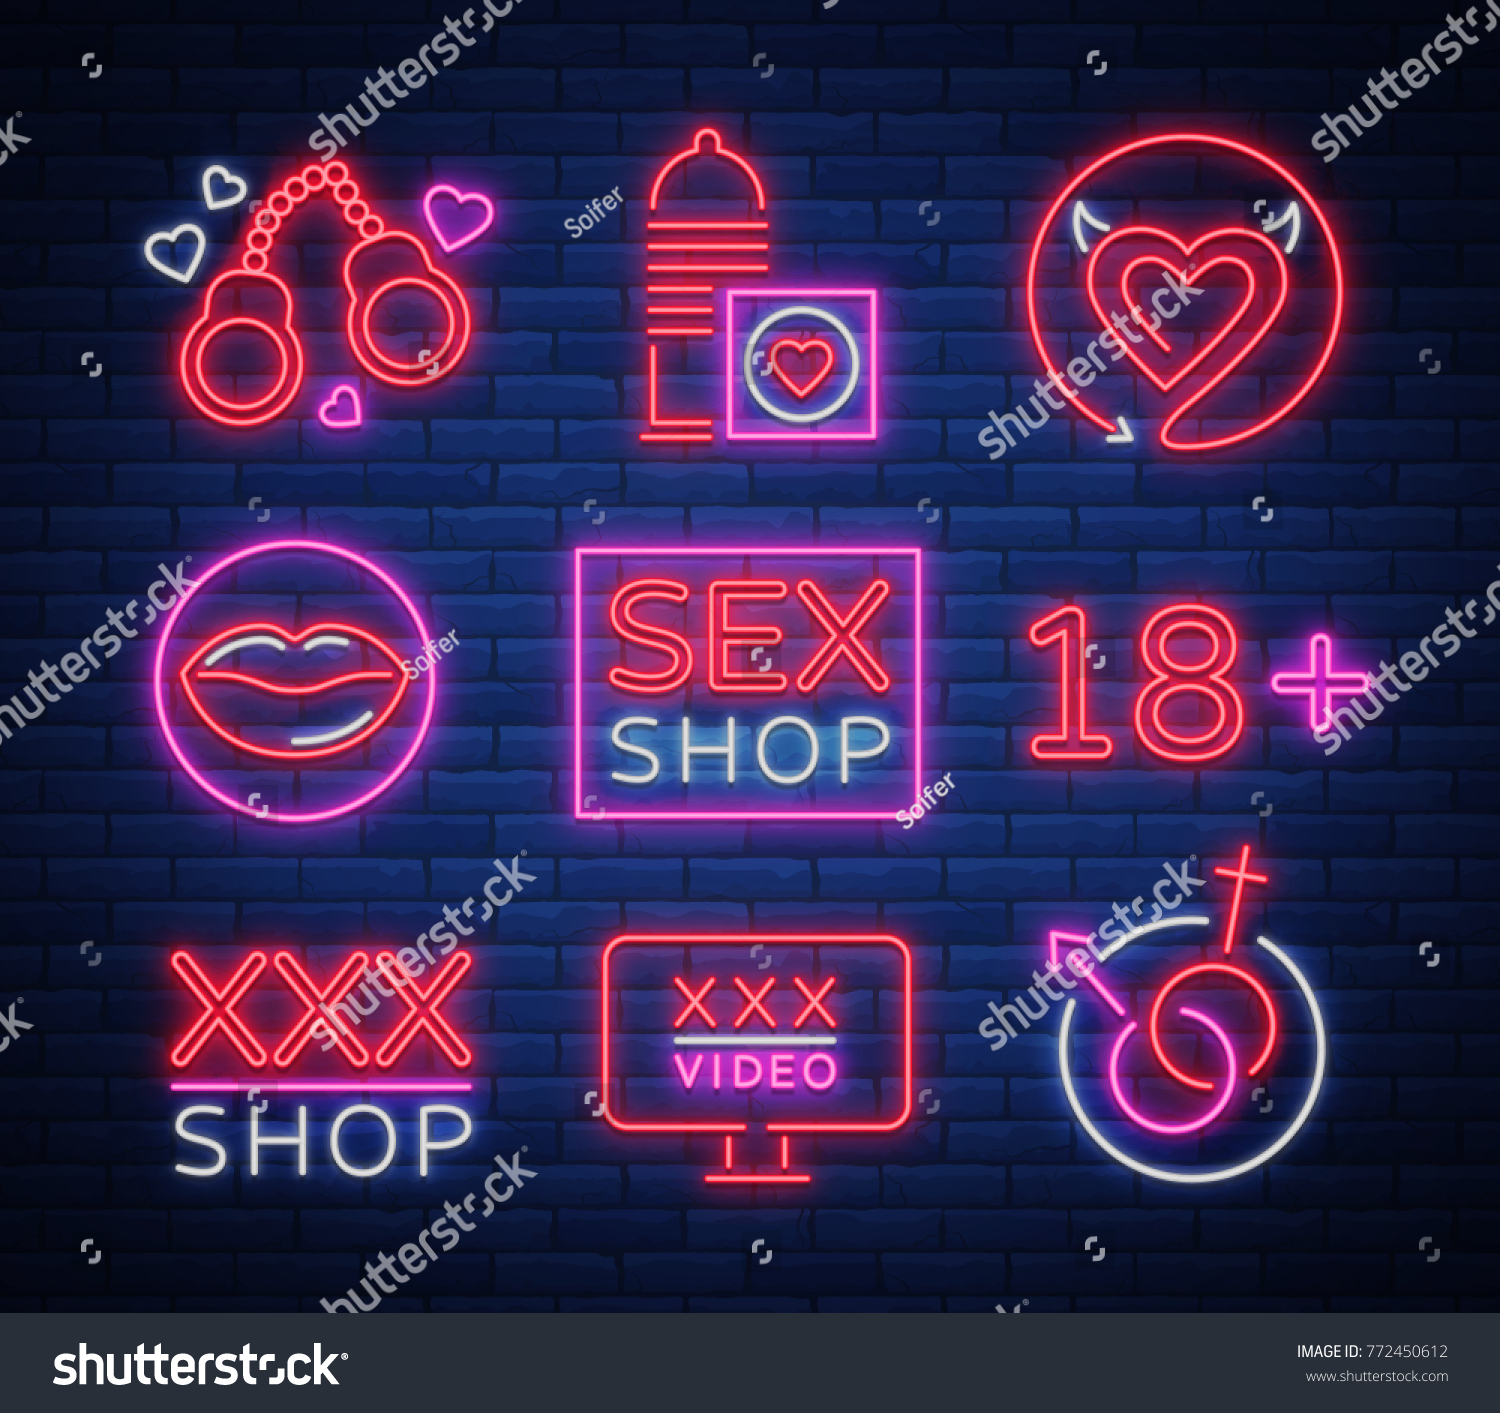 Sex Shop Set Logos Signs Symbols Stock Vector Royalty Free 772450612 Shutterstock